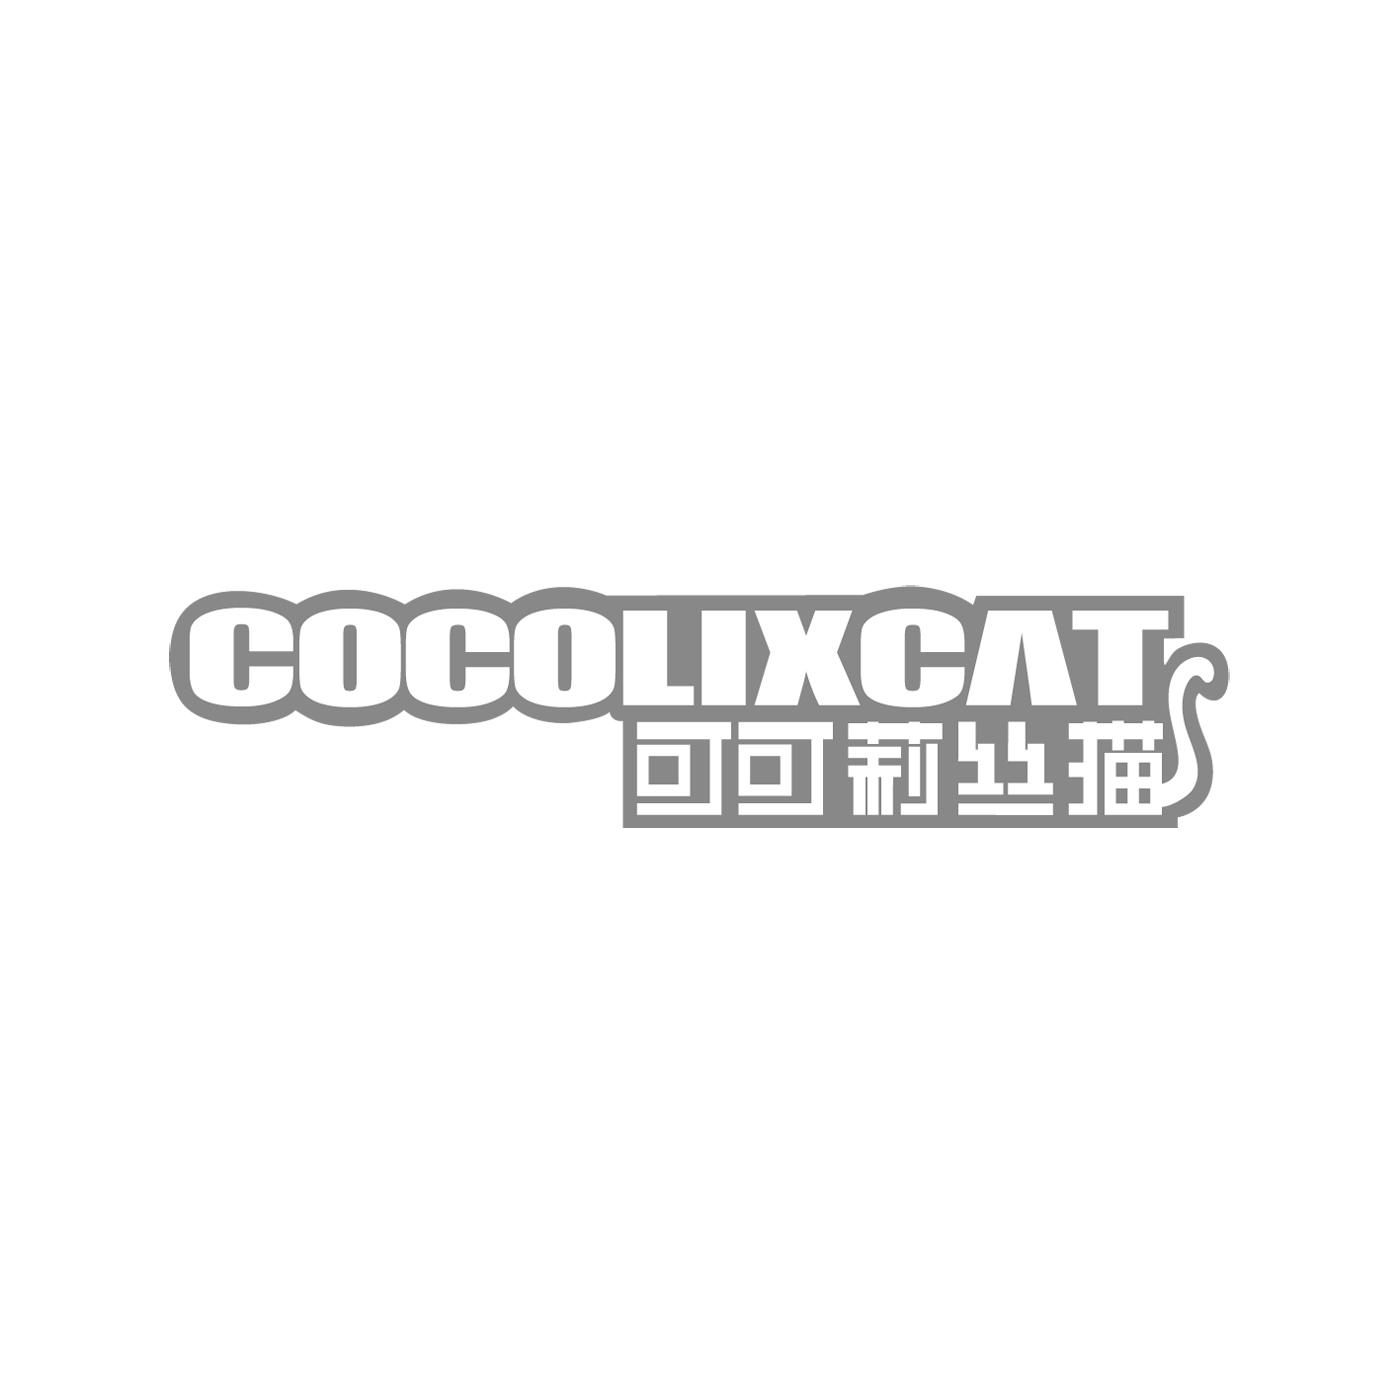 cocolixcat可可莉丝猫